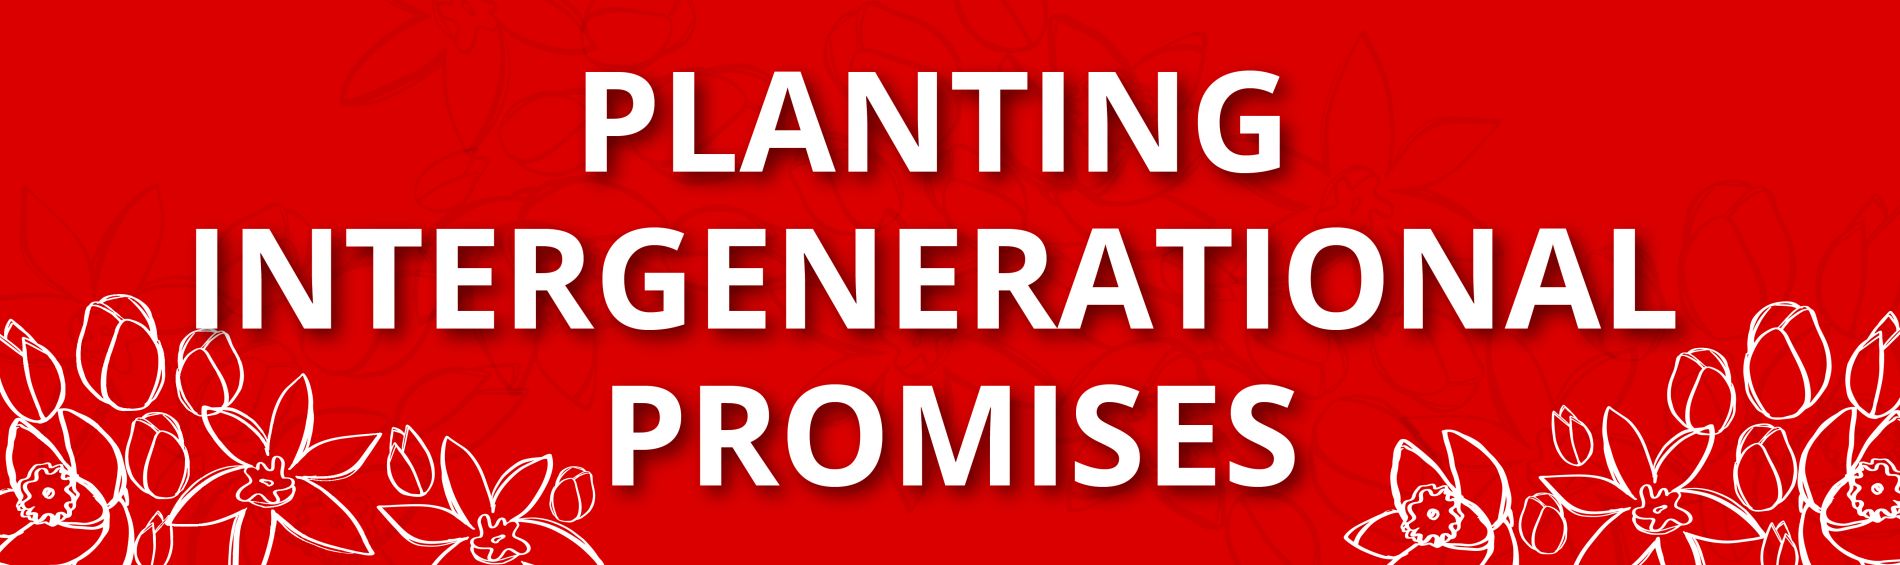 Planting Intergenerational Promises Launches